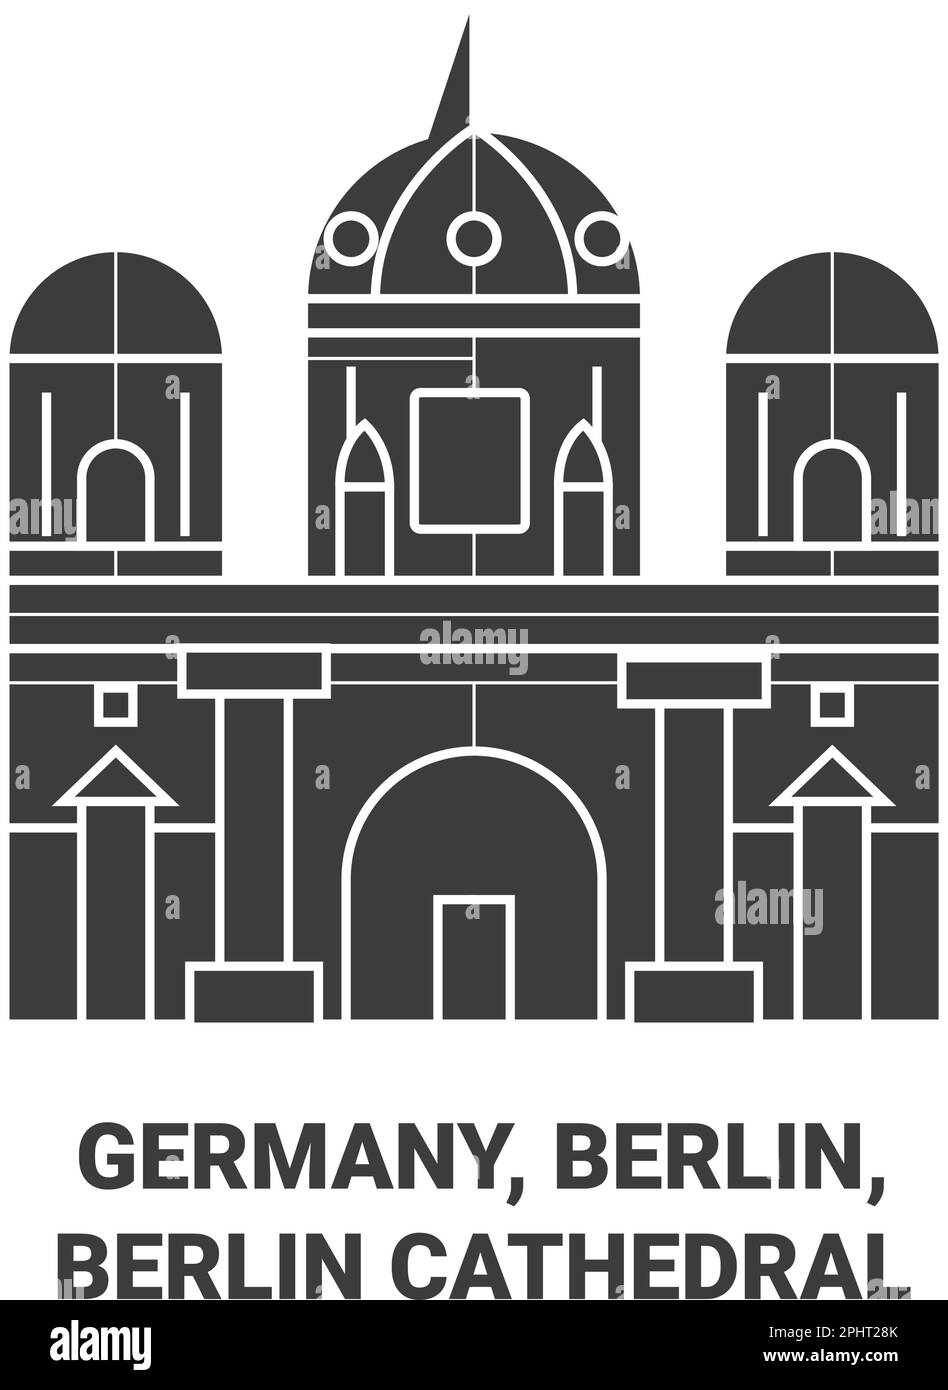 Germany, Berlin, Berlin Cathedral travel landmark vector illustration Stock Vector